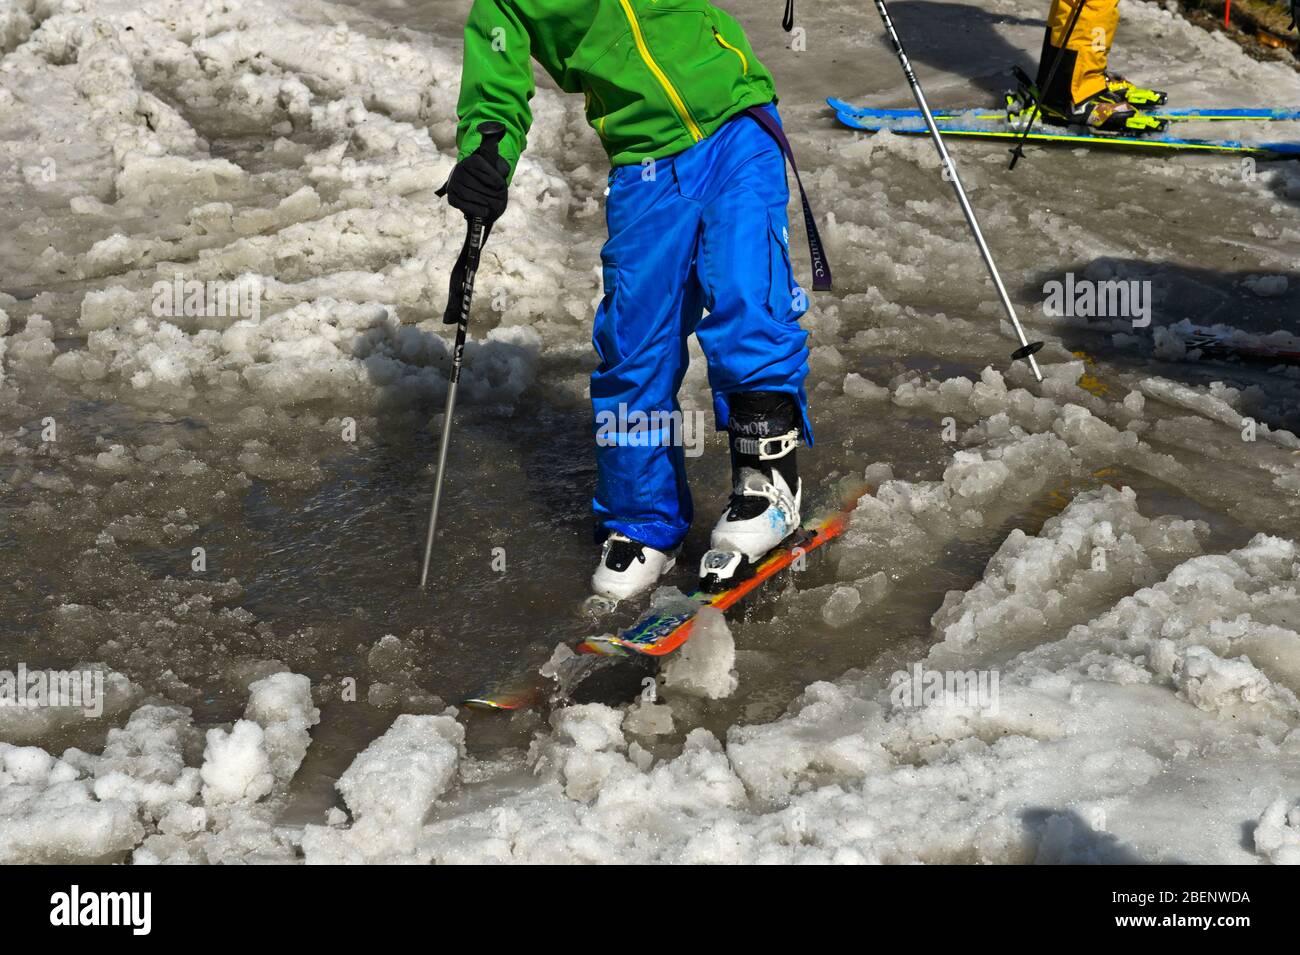 Skier wading with skis through slush and a puddle at the end of the ski season, Chamonix, Haute-Savoie, France Stock Photo